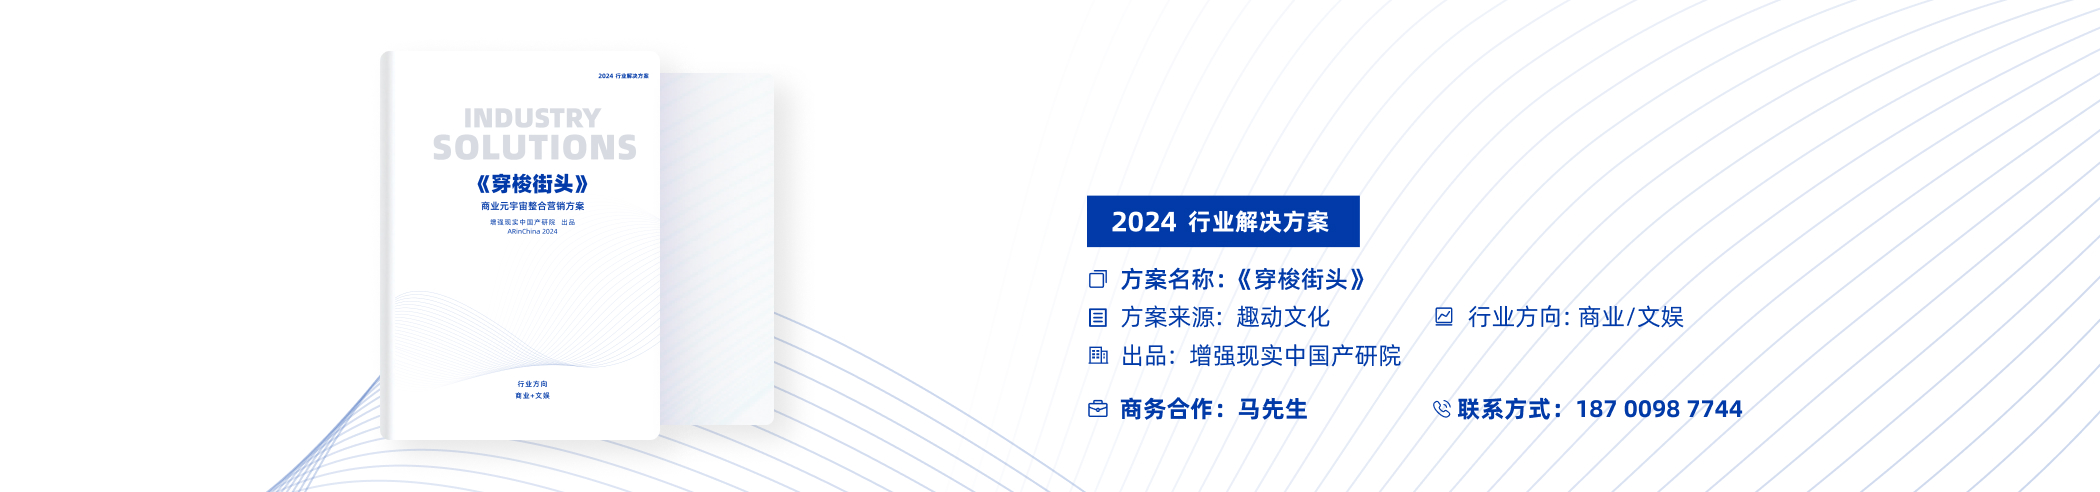 ARinChina2023元宇宙年度荣誉榜——创新应用榜单